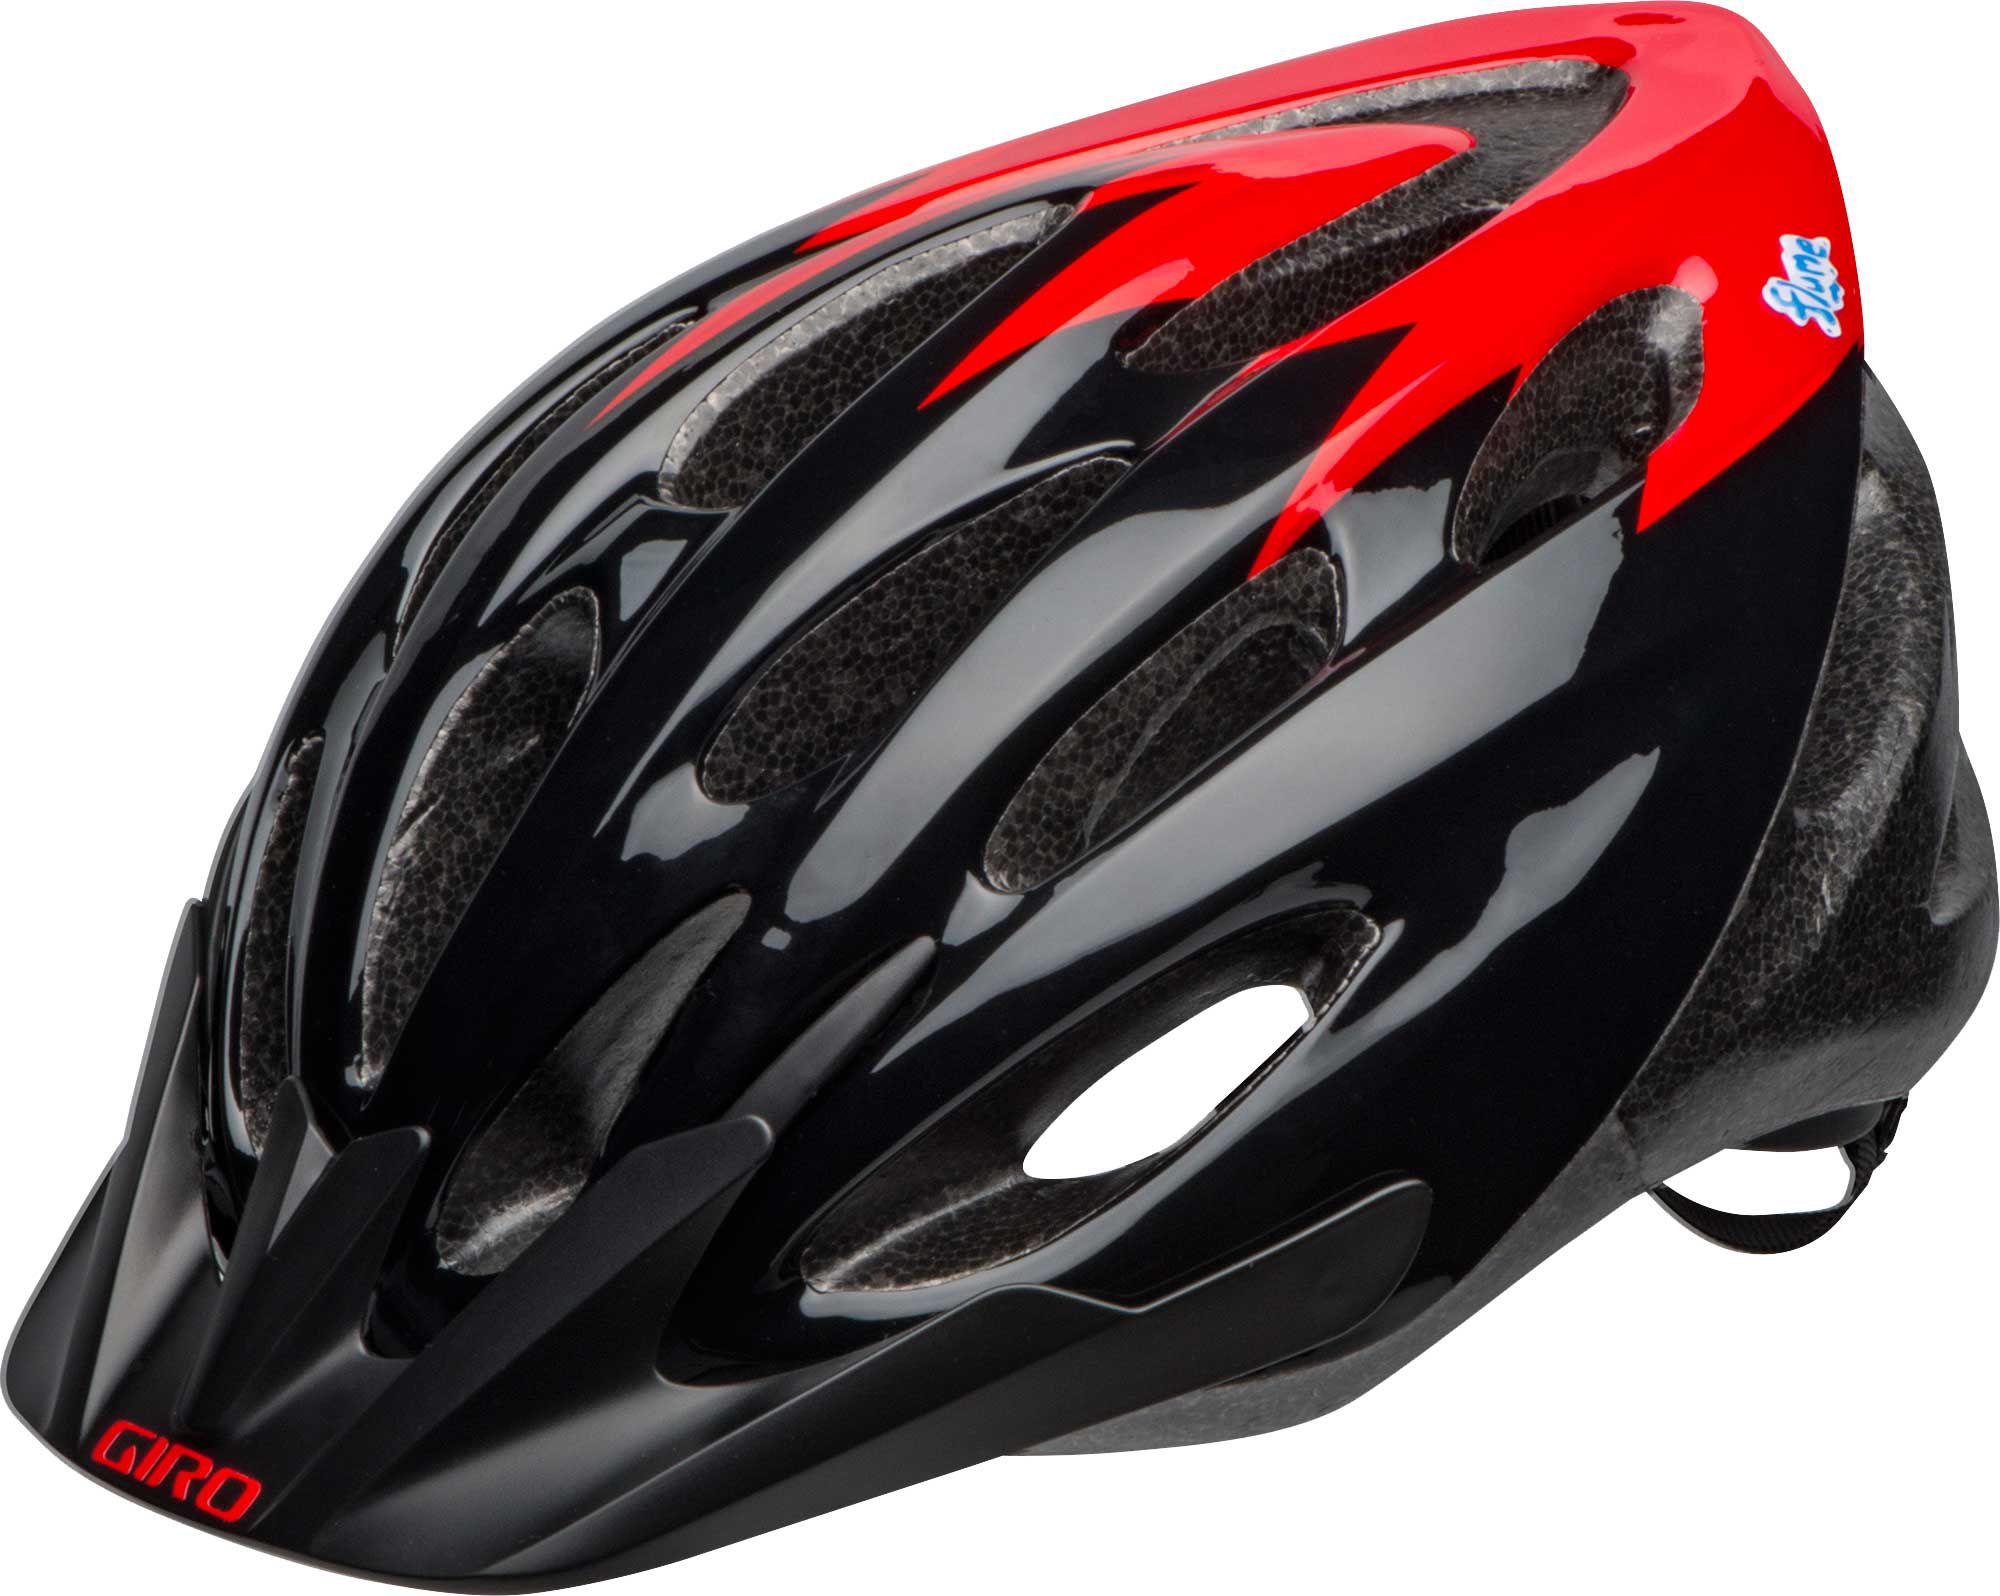 Cycling helmet photo